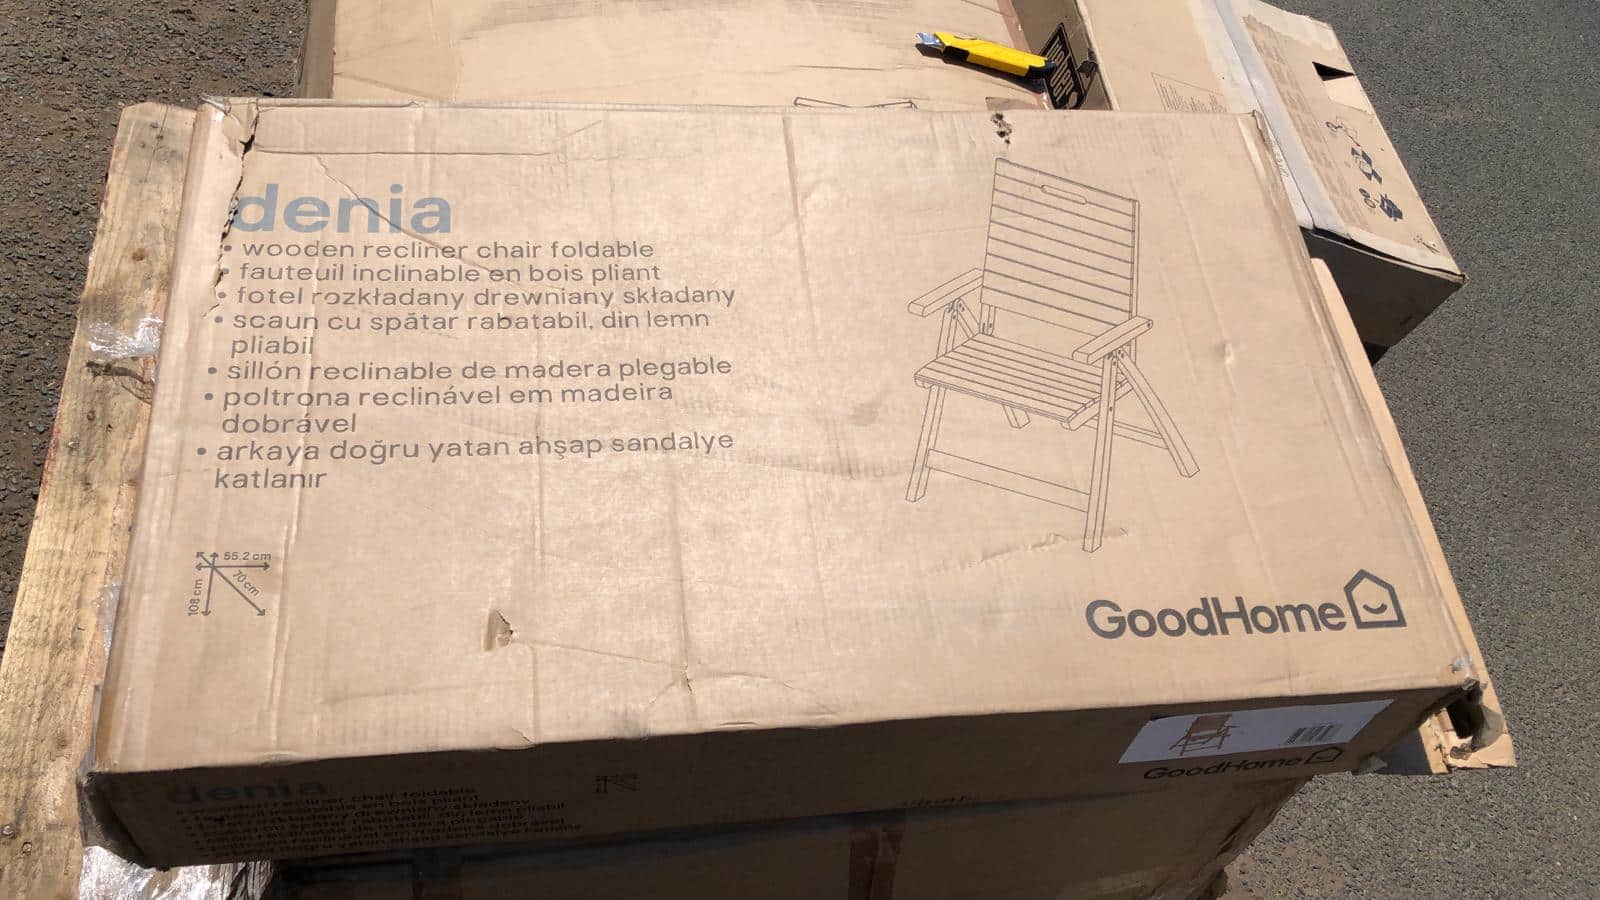 GoodHome Denia Wooden Foldable Recliner Chair Garden Chair 5988